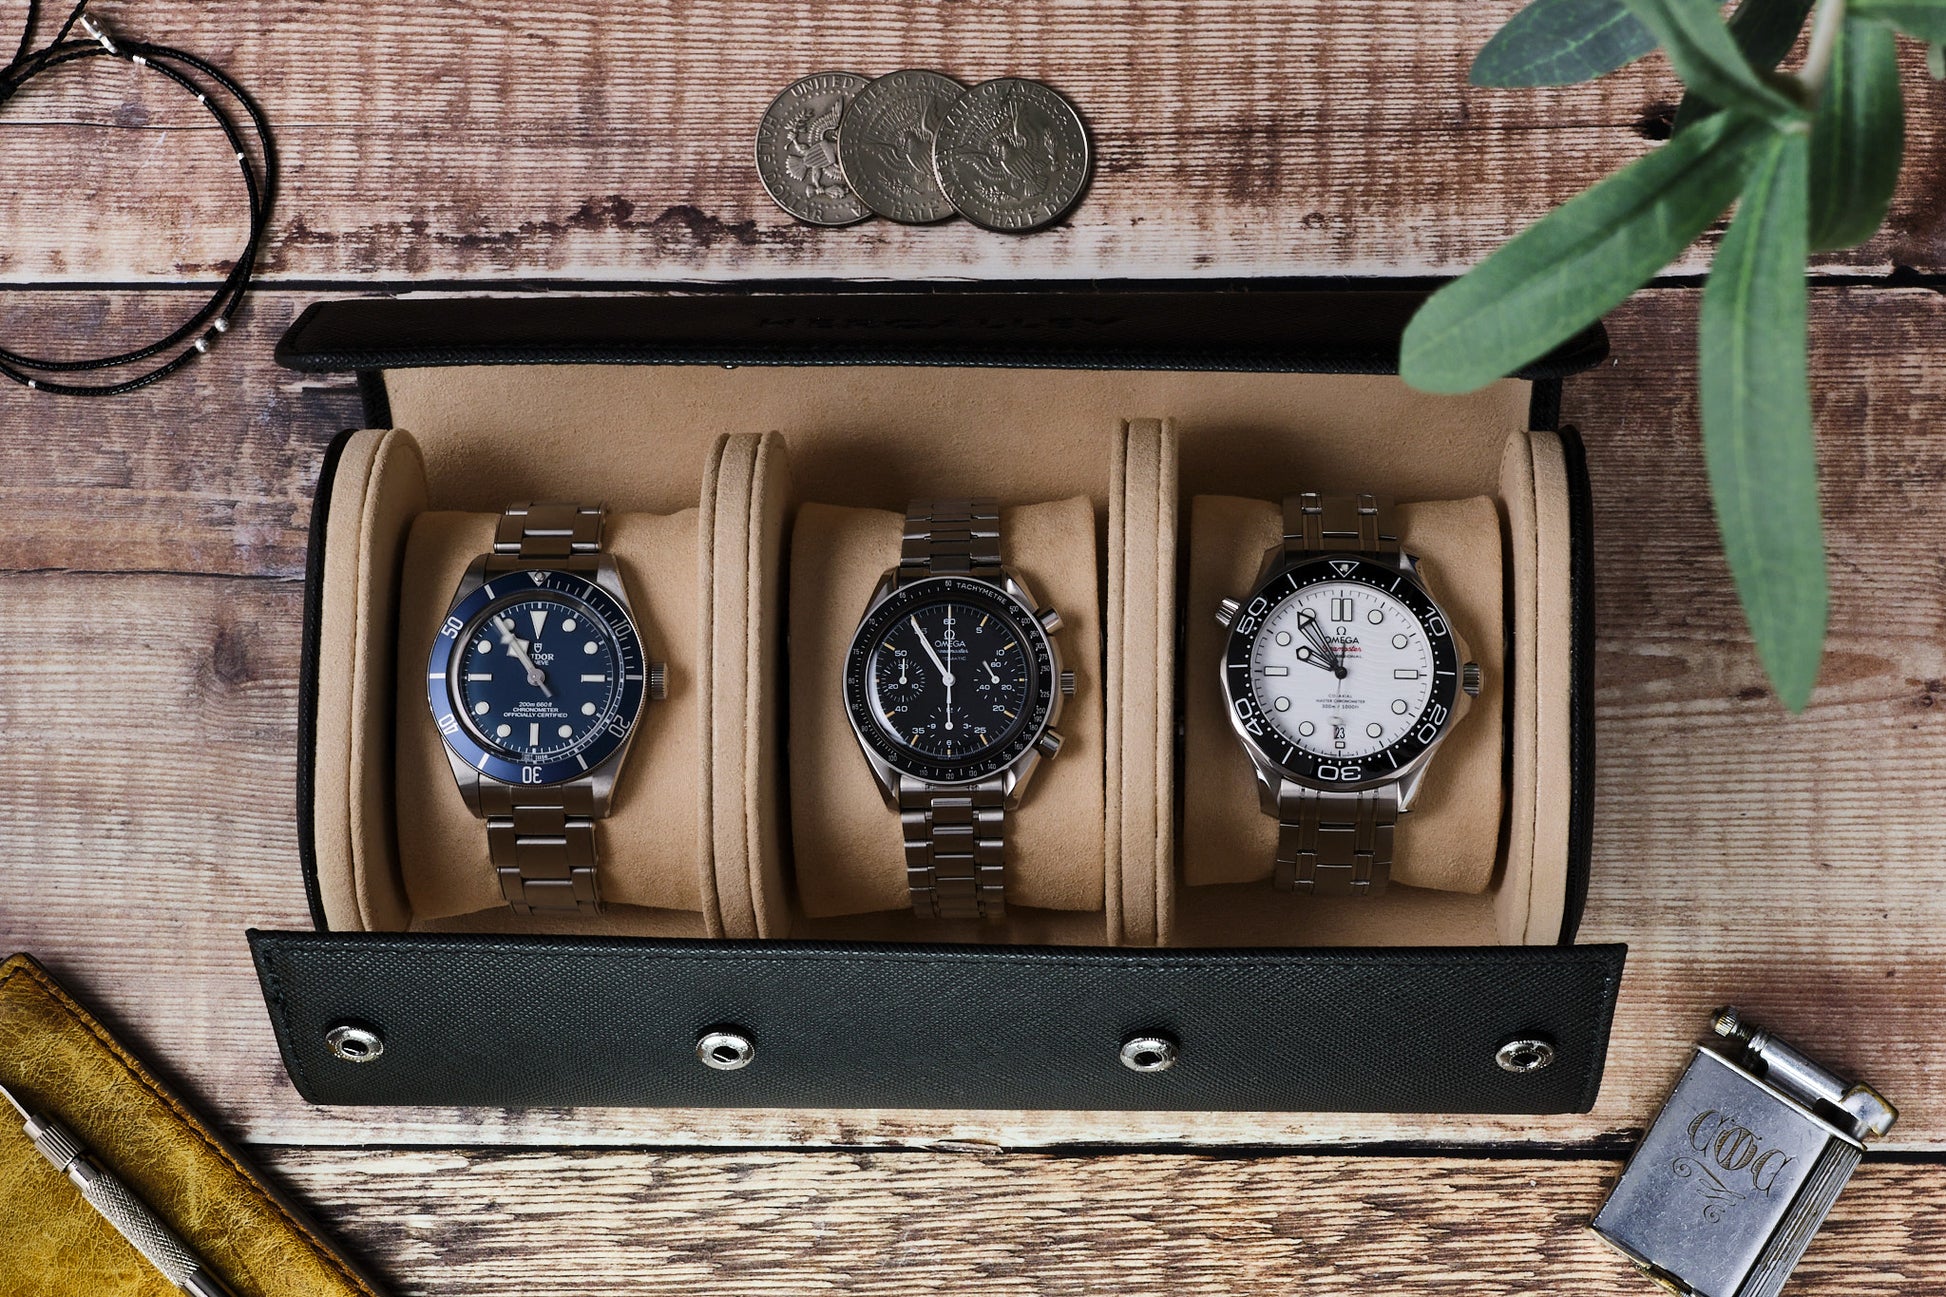 Black Saffiano Watch Roll - Three Watches – WATCH ESSENTIA